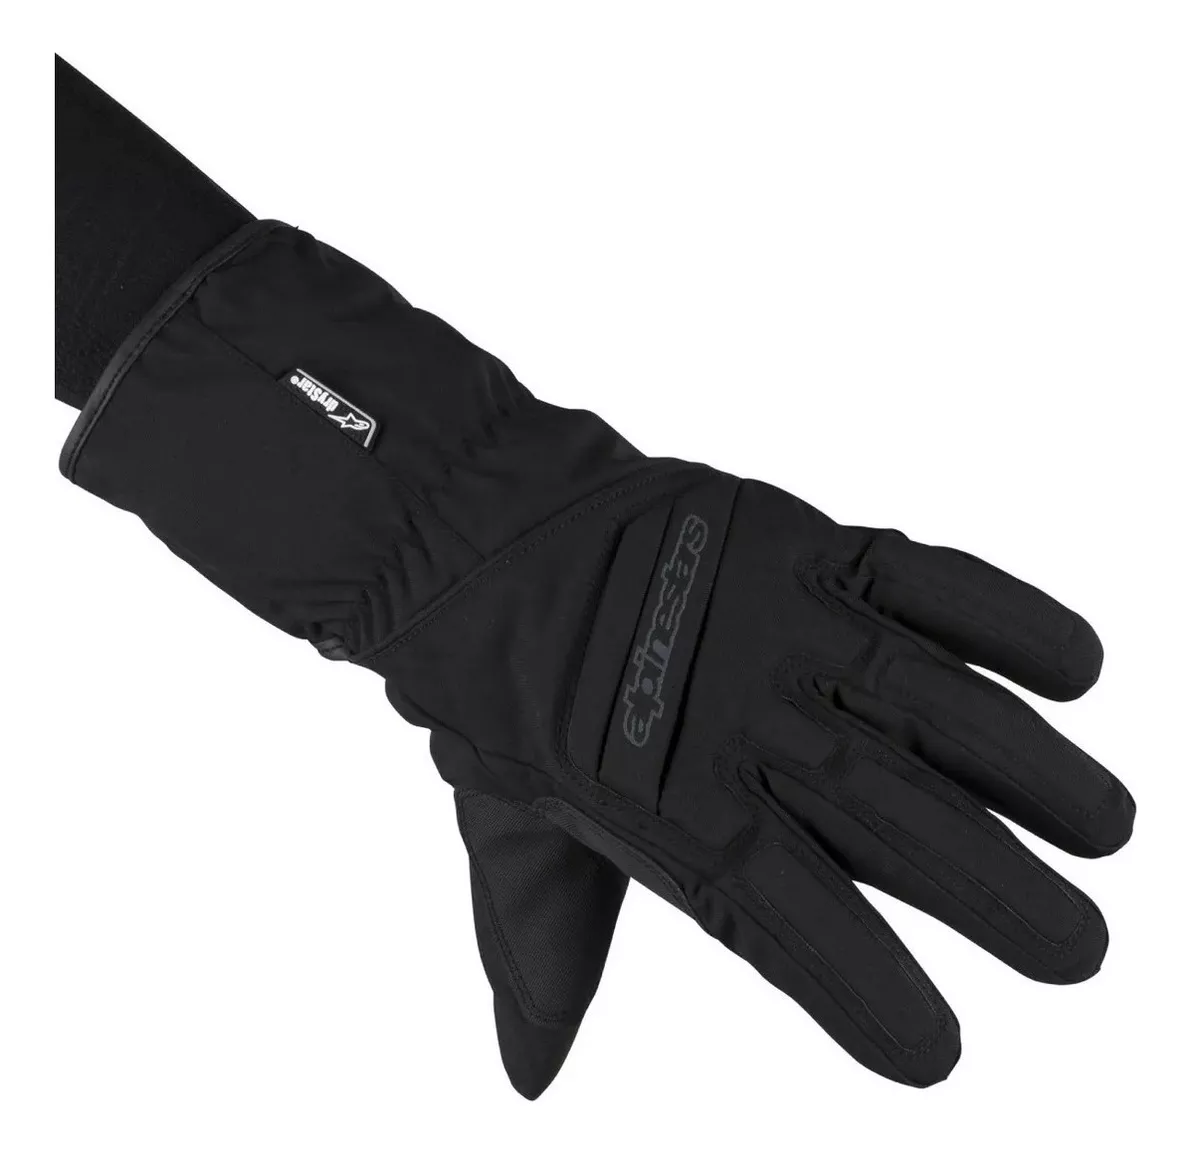 Primera imagen para búsqueda de guantes de moto impermeables